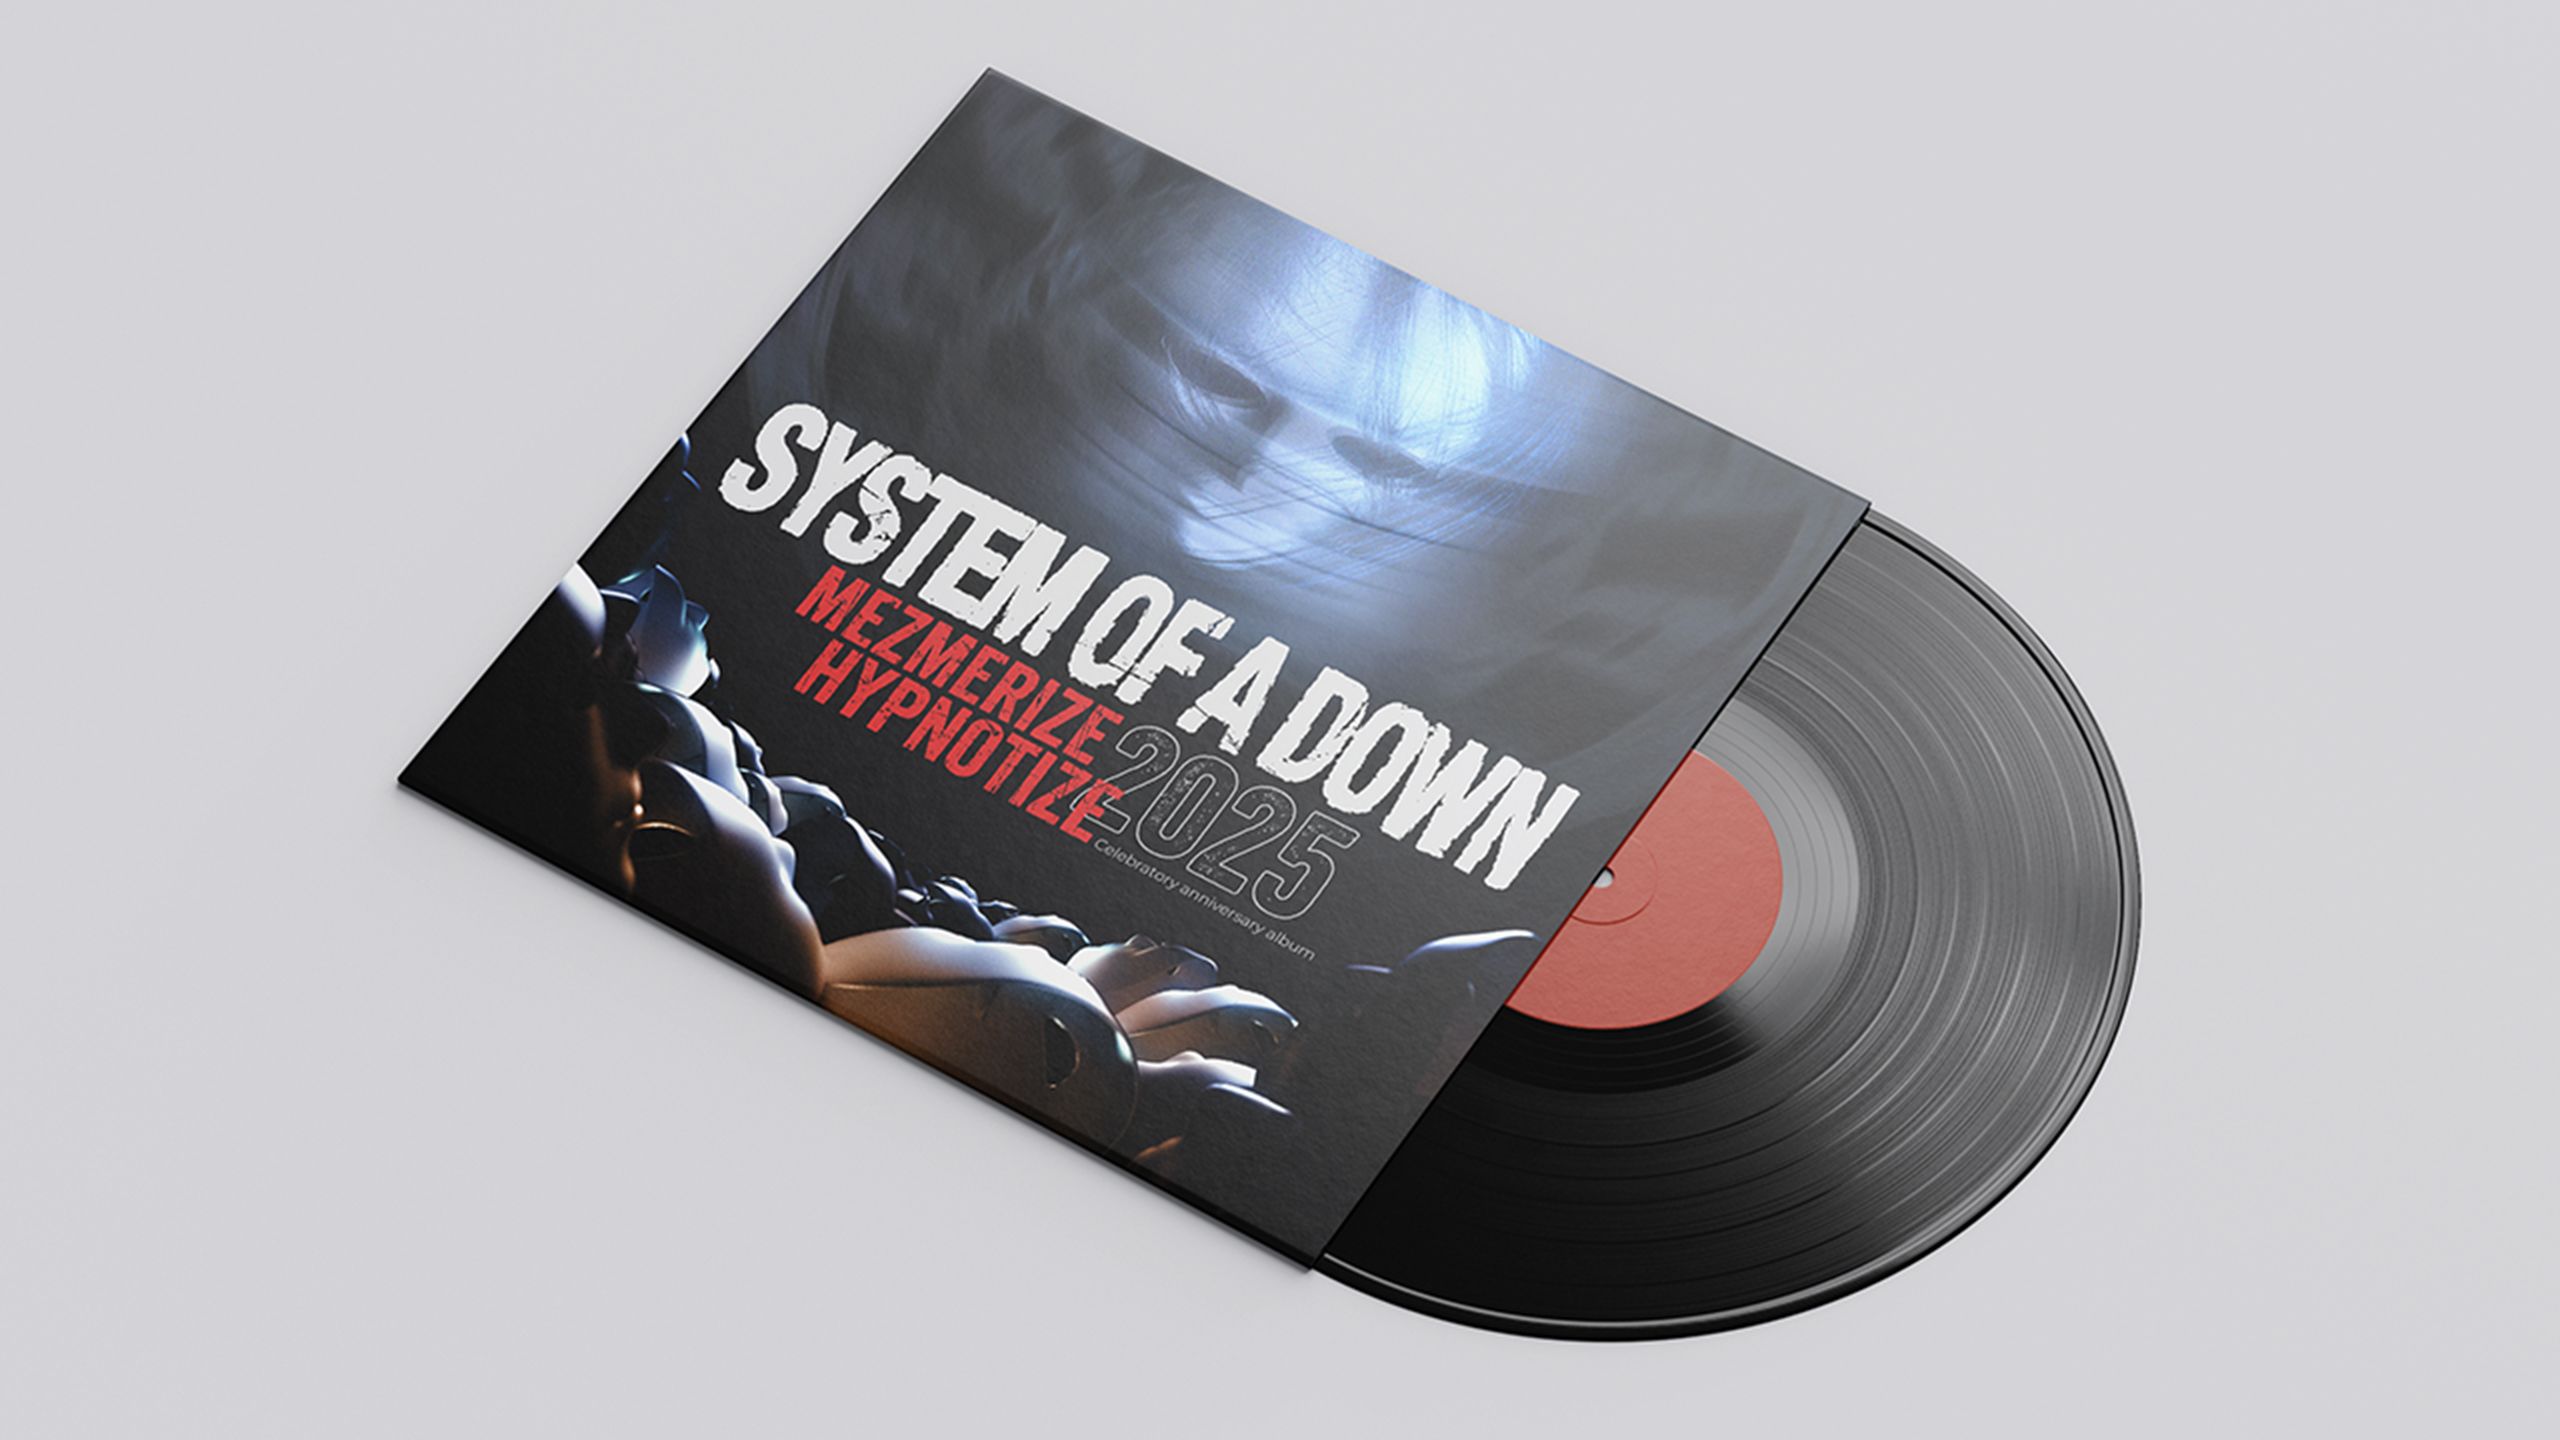 Albumcover for 20-årsjubileum for System of a Down.